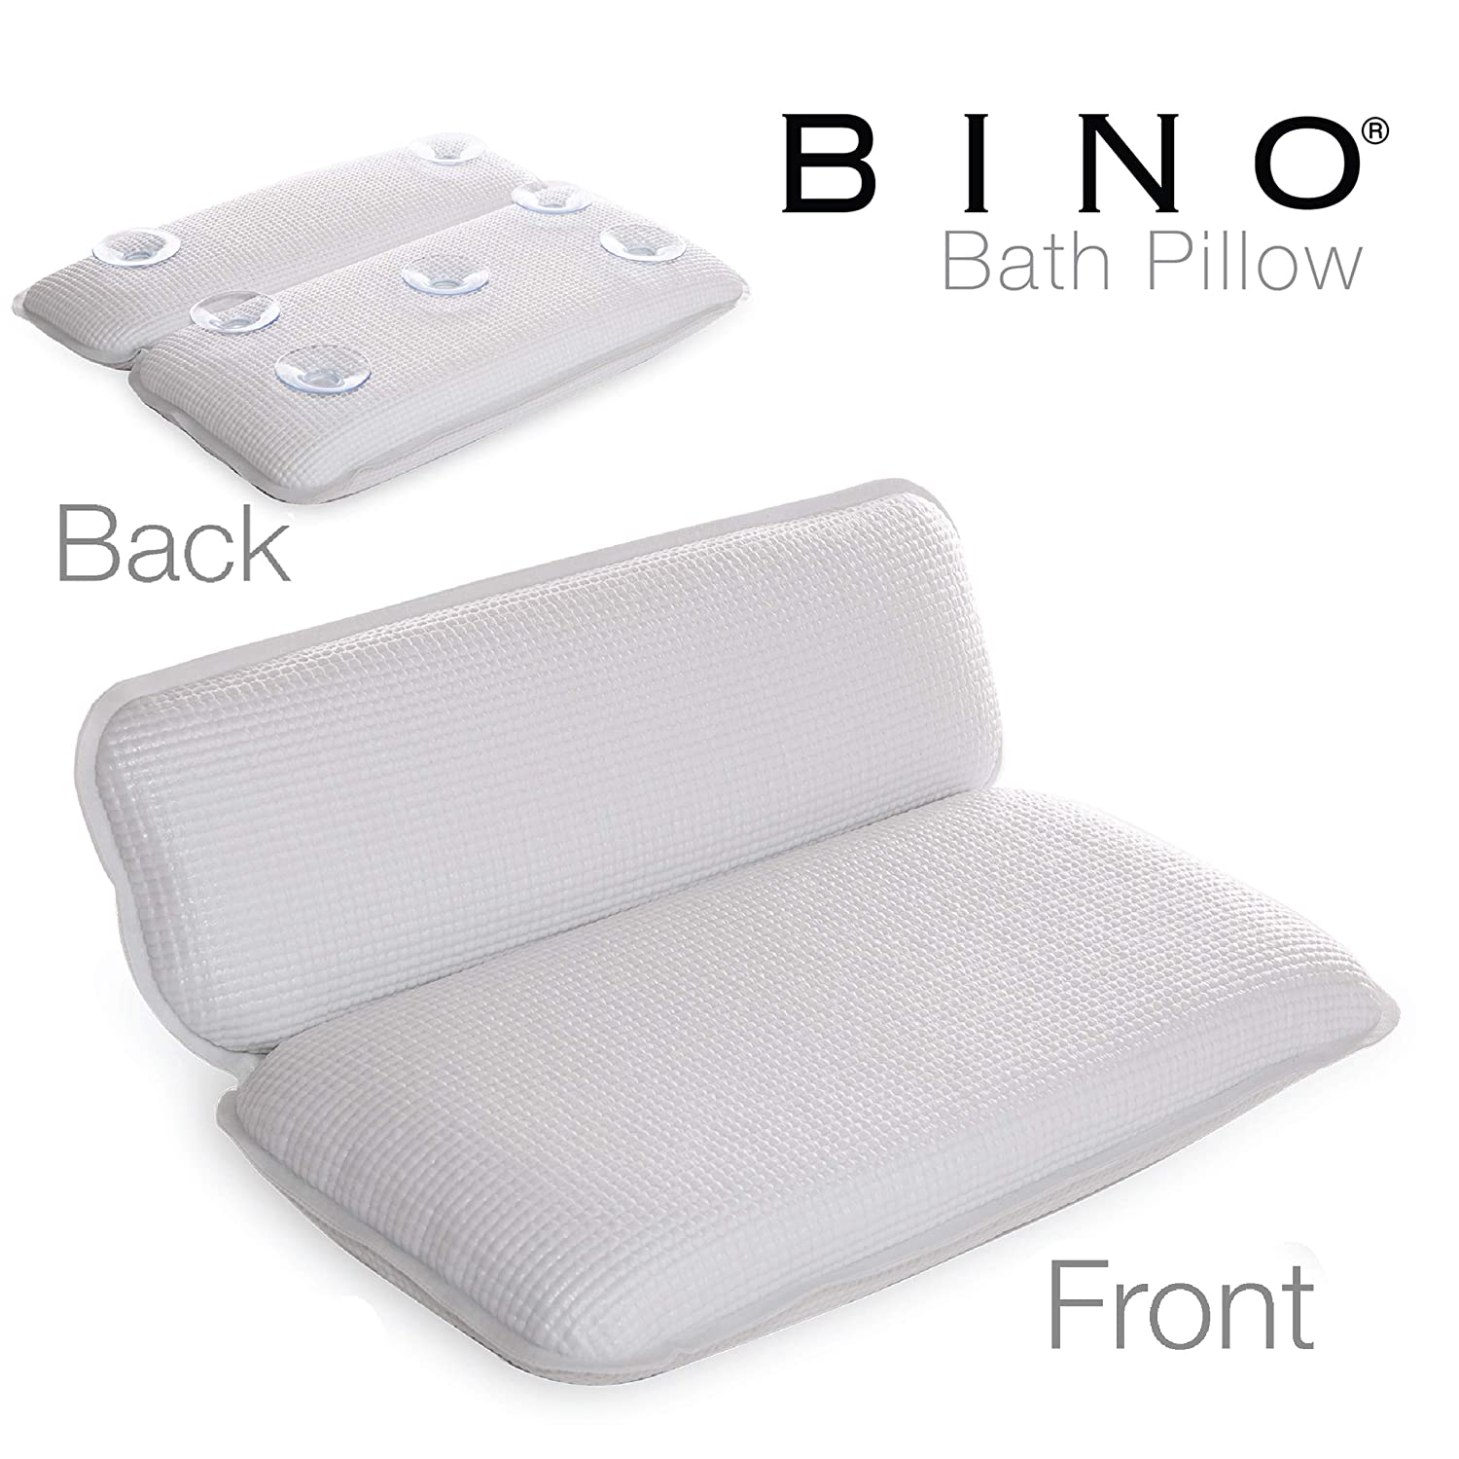 bino bath pillows